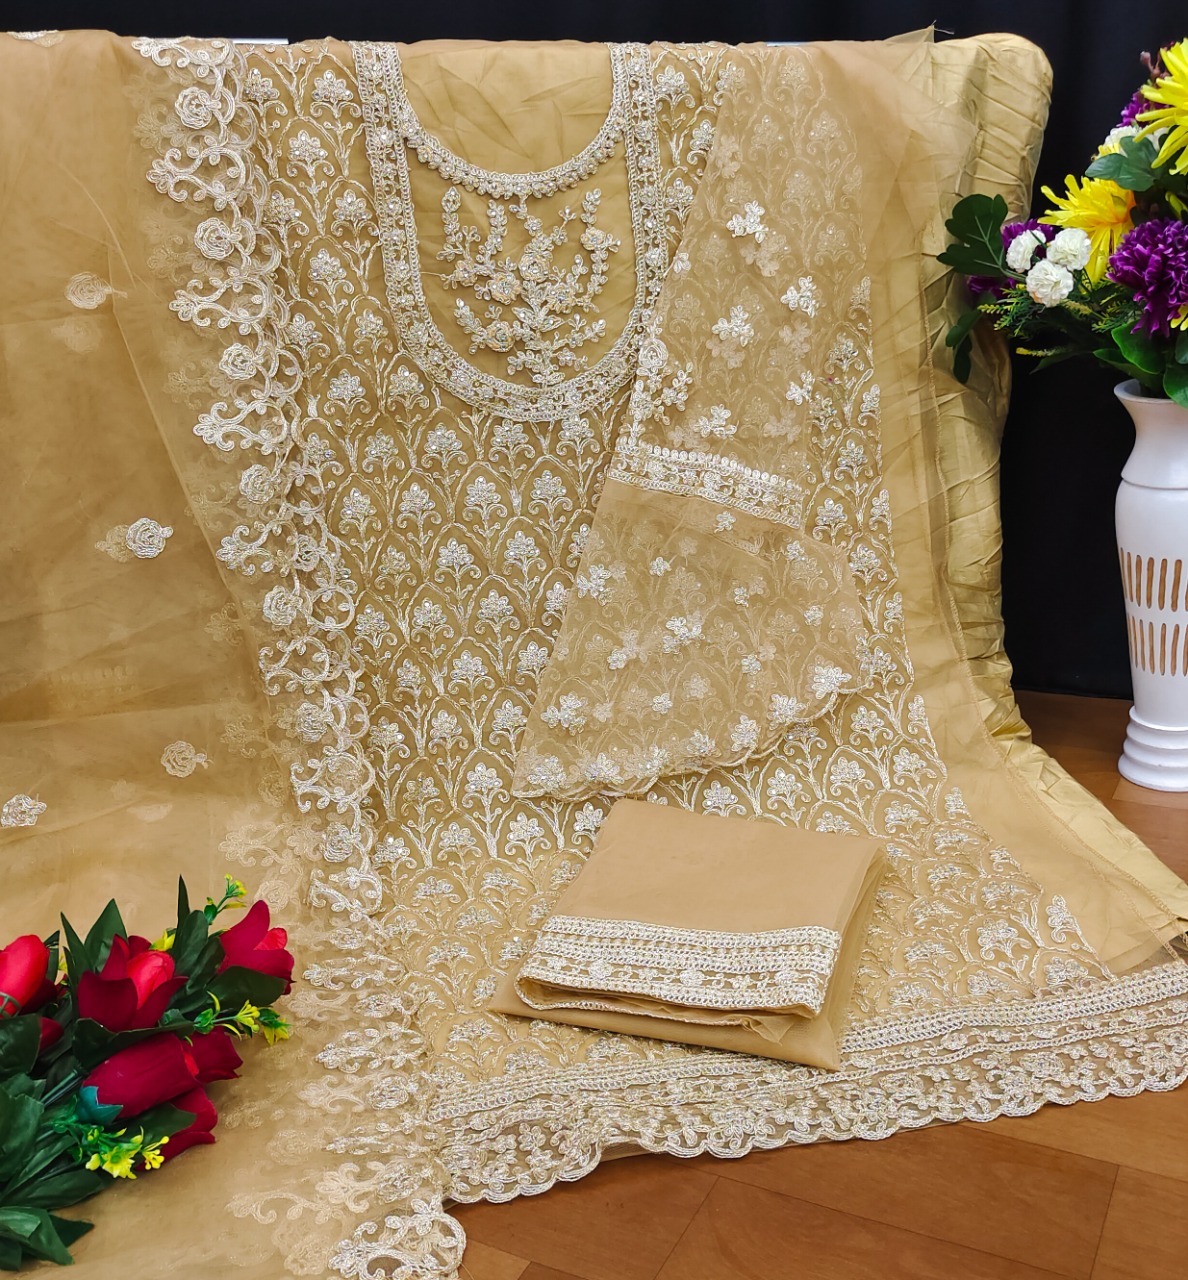 Swagat Swati 3308 Colors Kaleesha Fashion Semi Stitched Suits Manufacturer Wholesaler